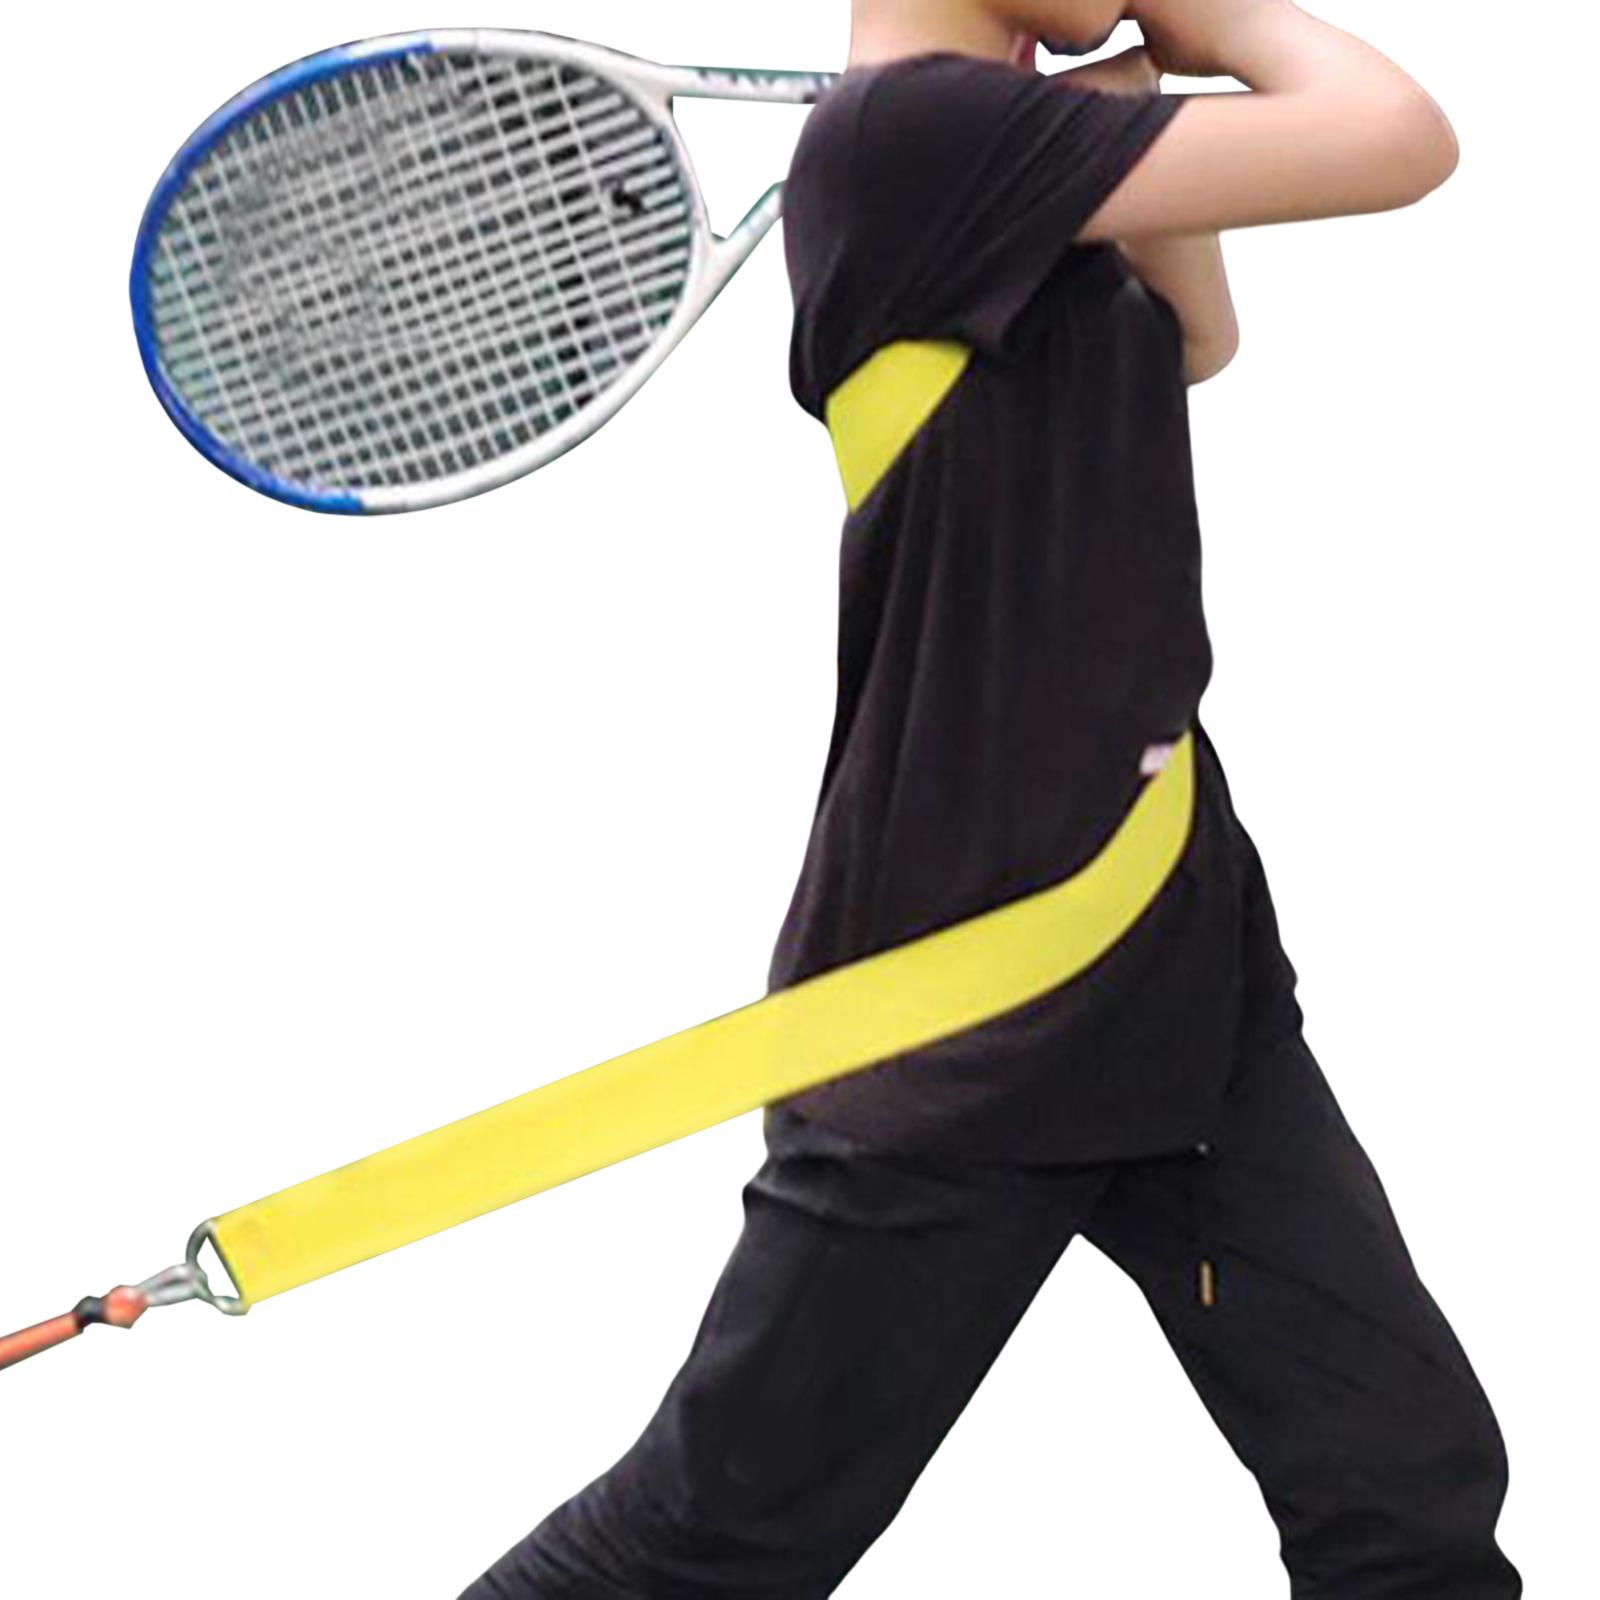 Tennis Trainer Belt Swing Practice Power Running Tools Yellow